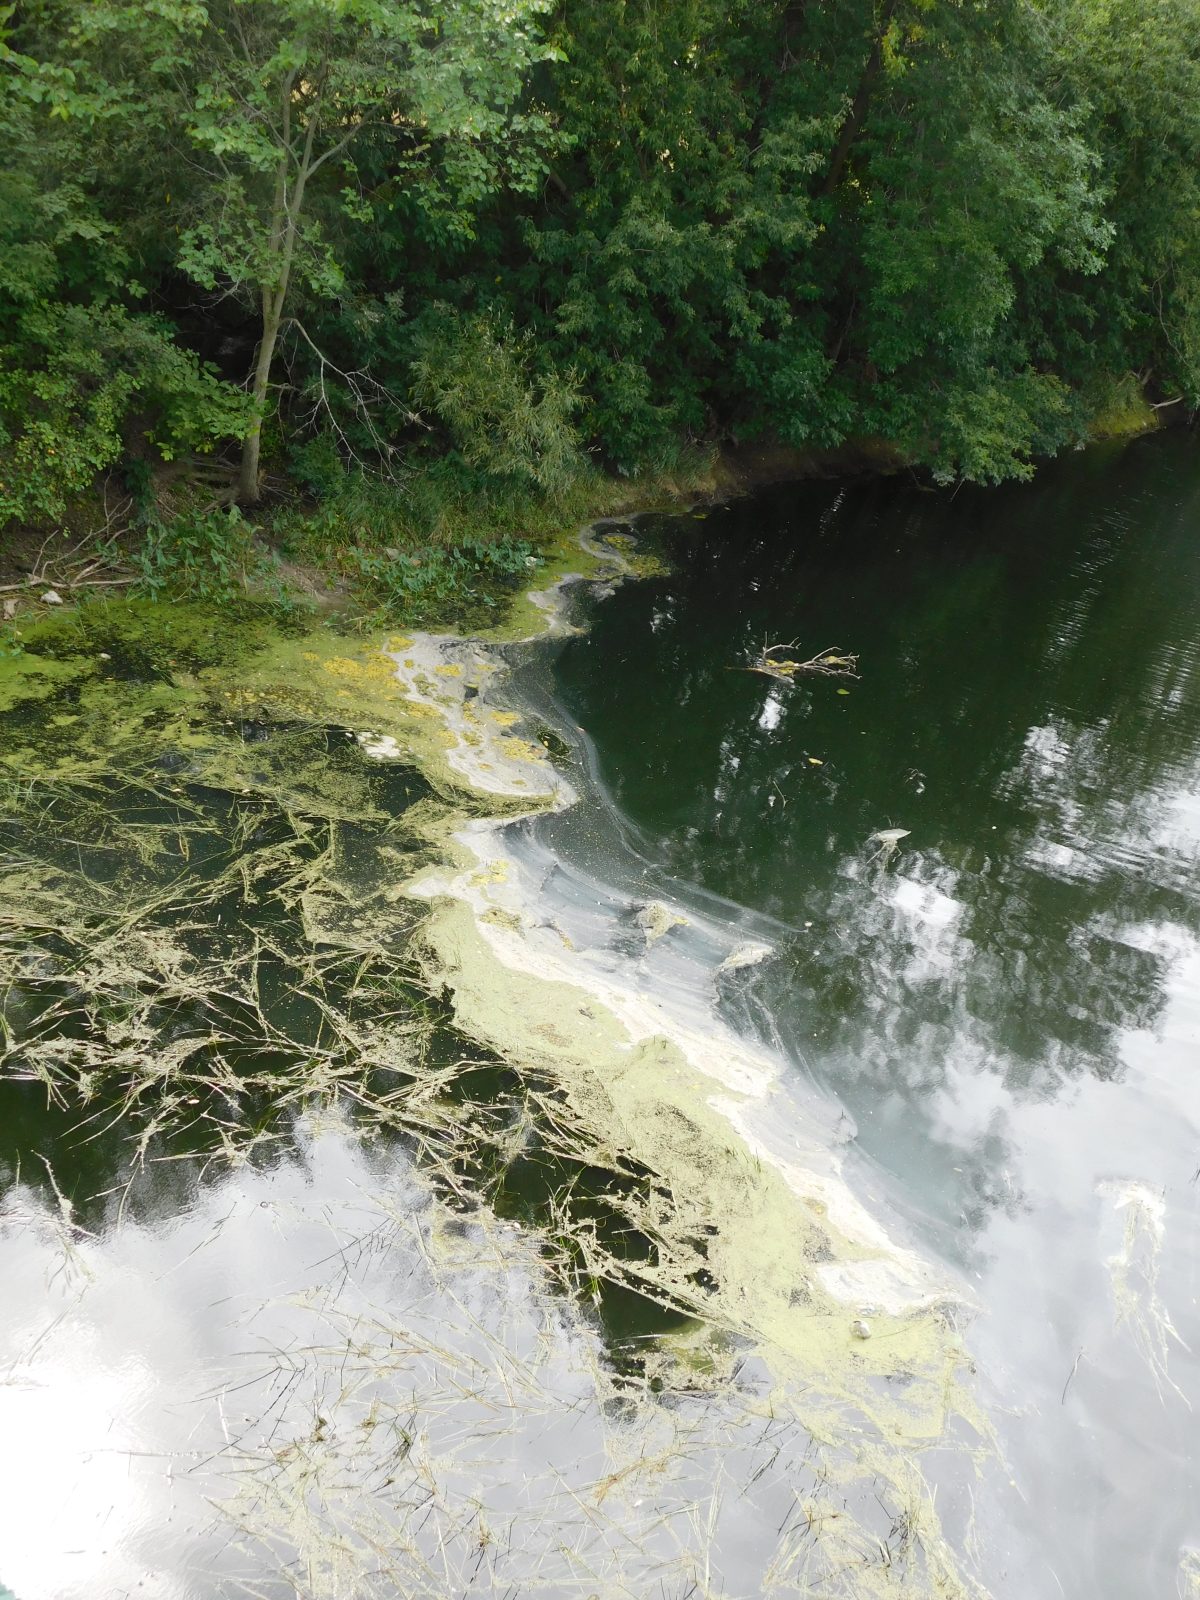 Rigaud River investigation continues